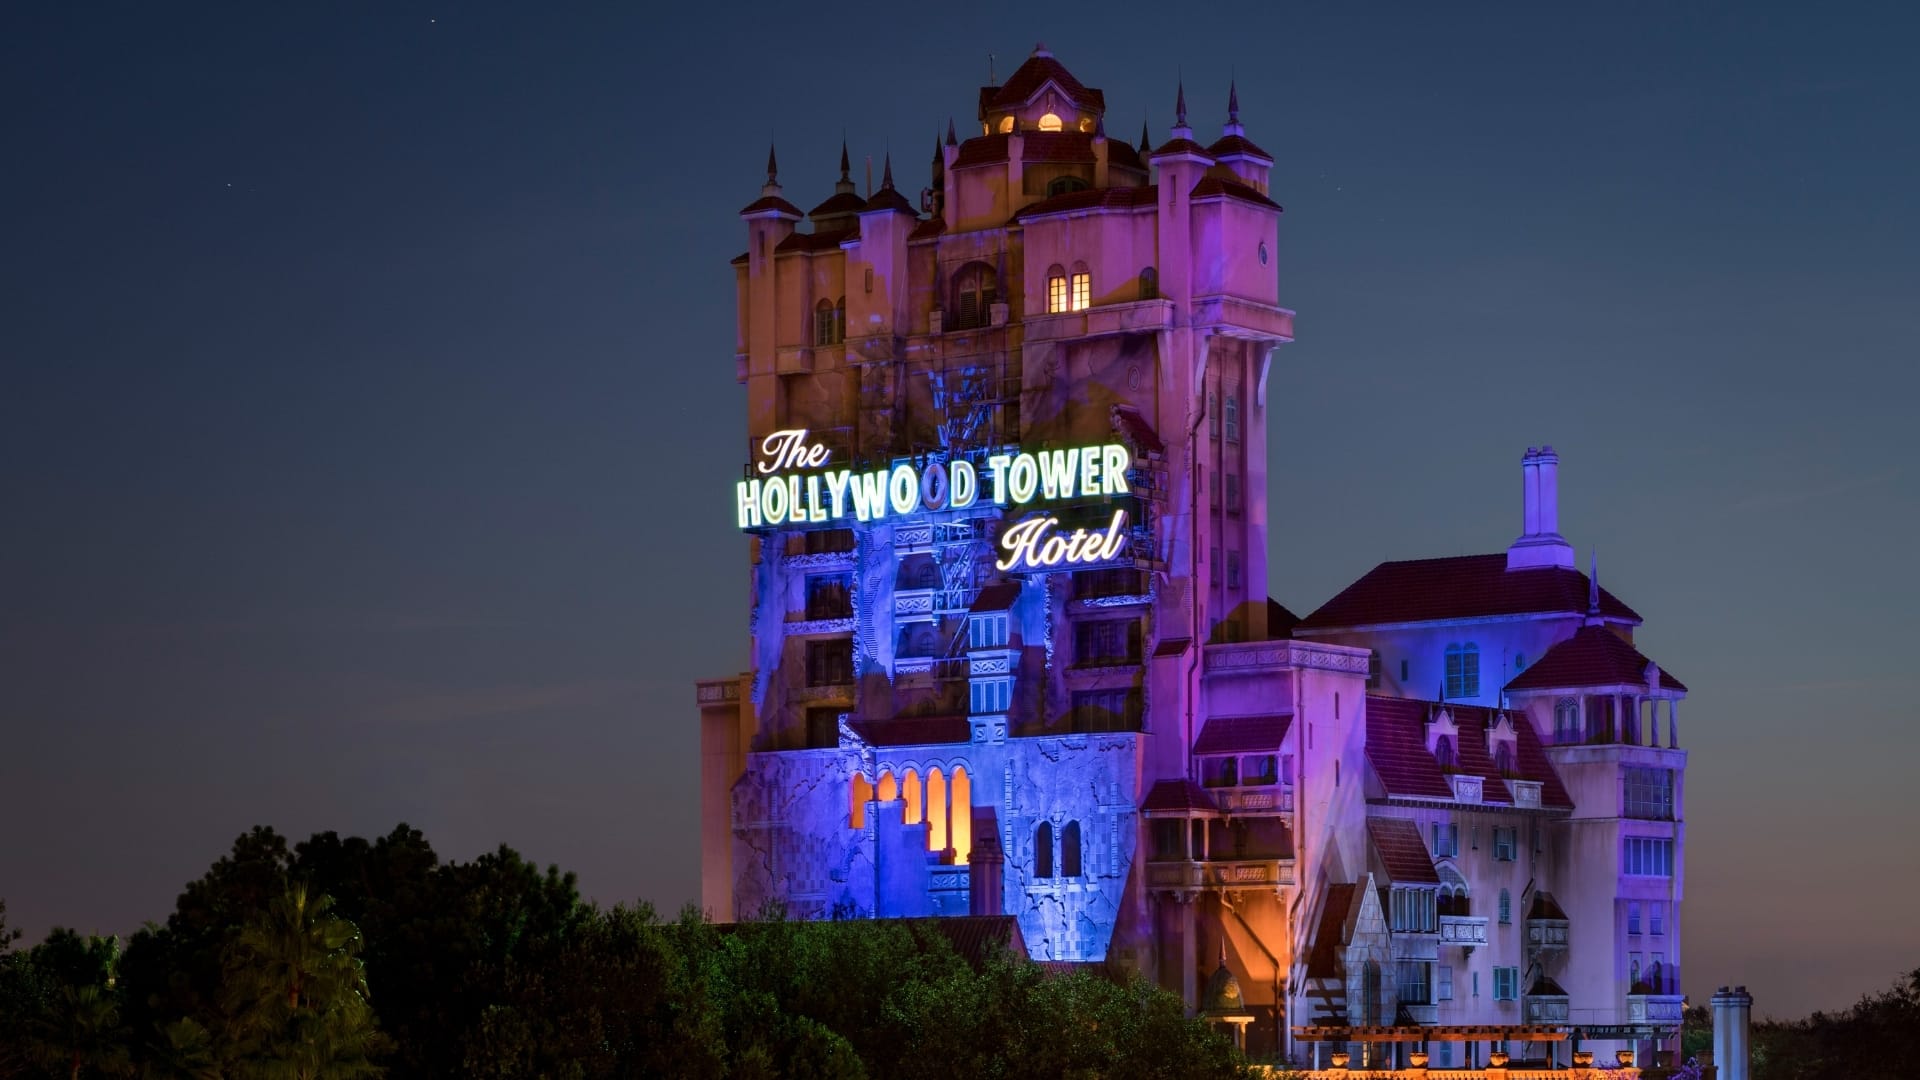 The Hollywood Terror Hotel at Disney's Hollywood Studios